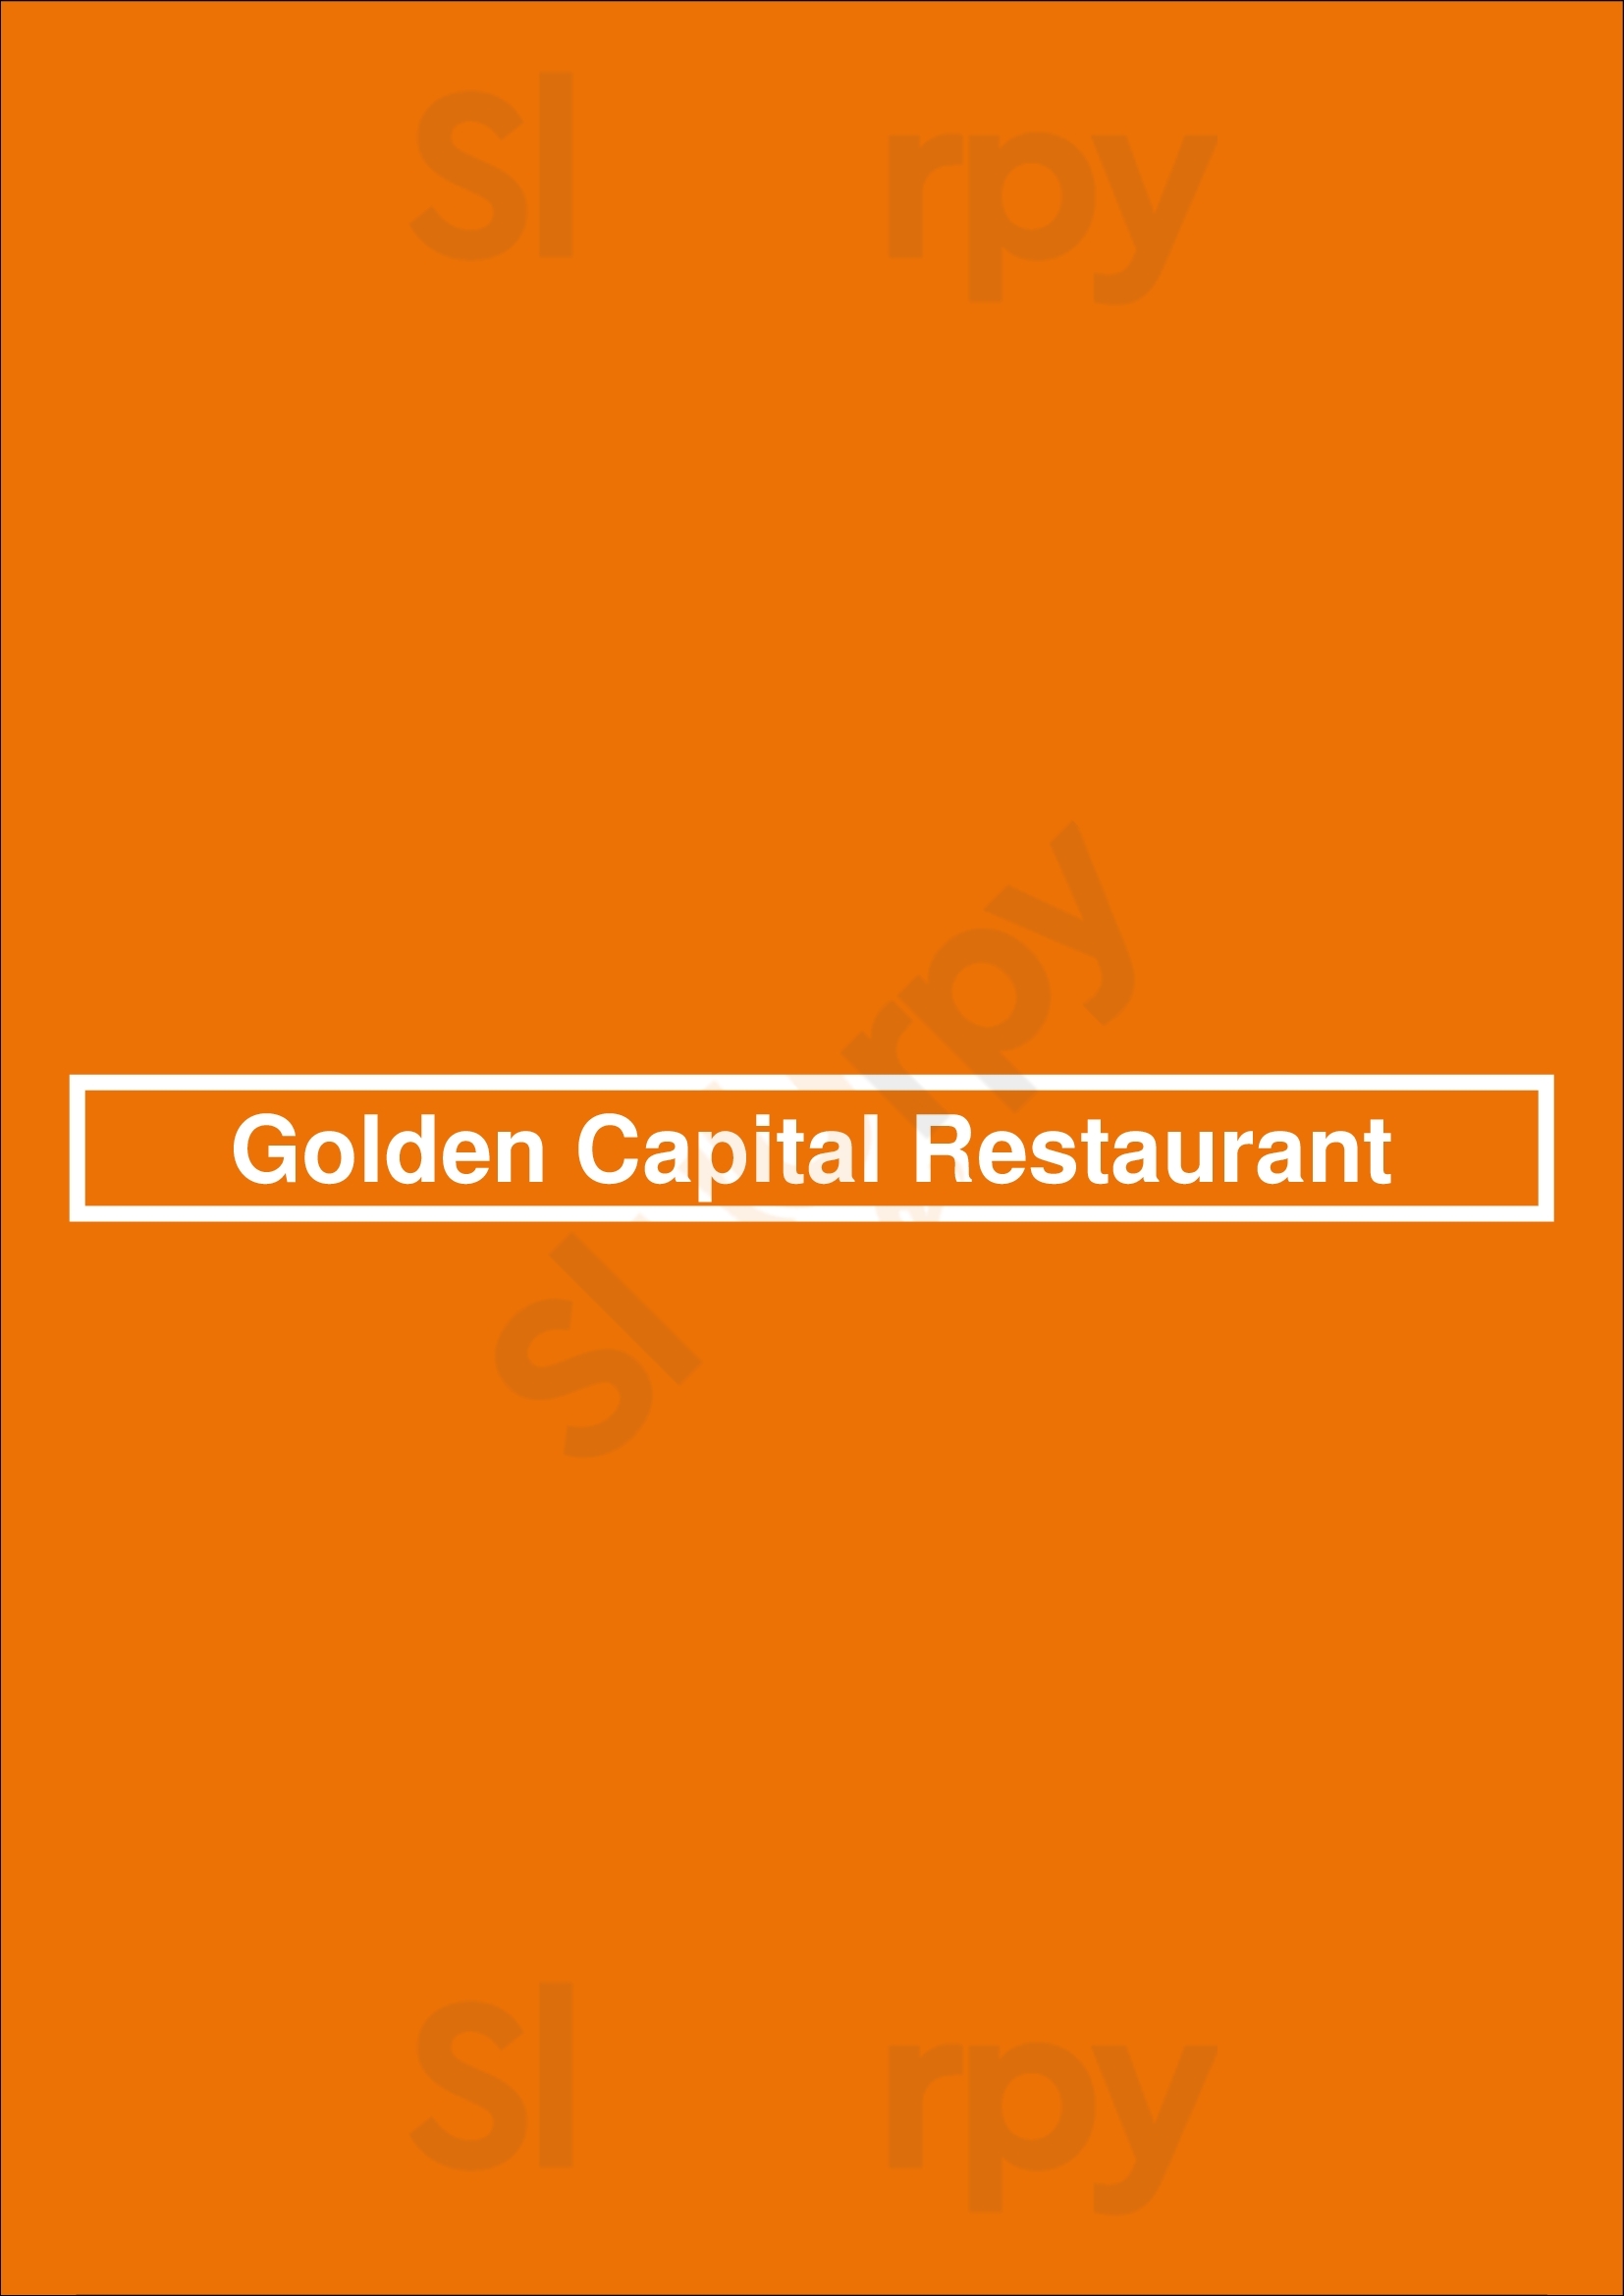 Golden Capital Restaurant Sherwood Park Menu - 1